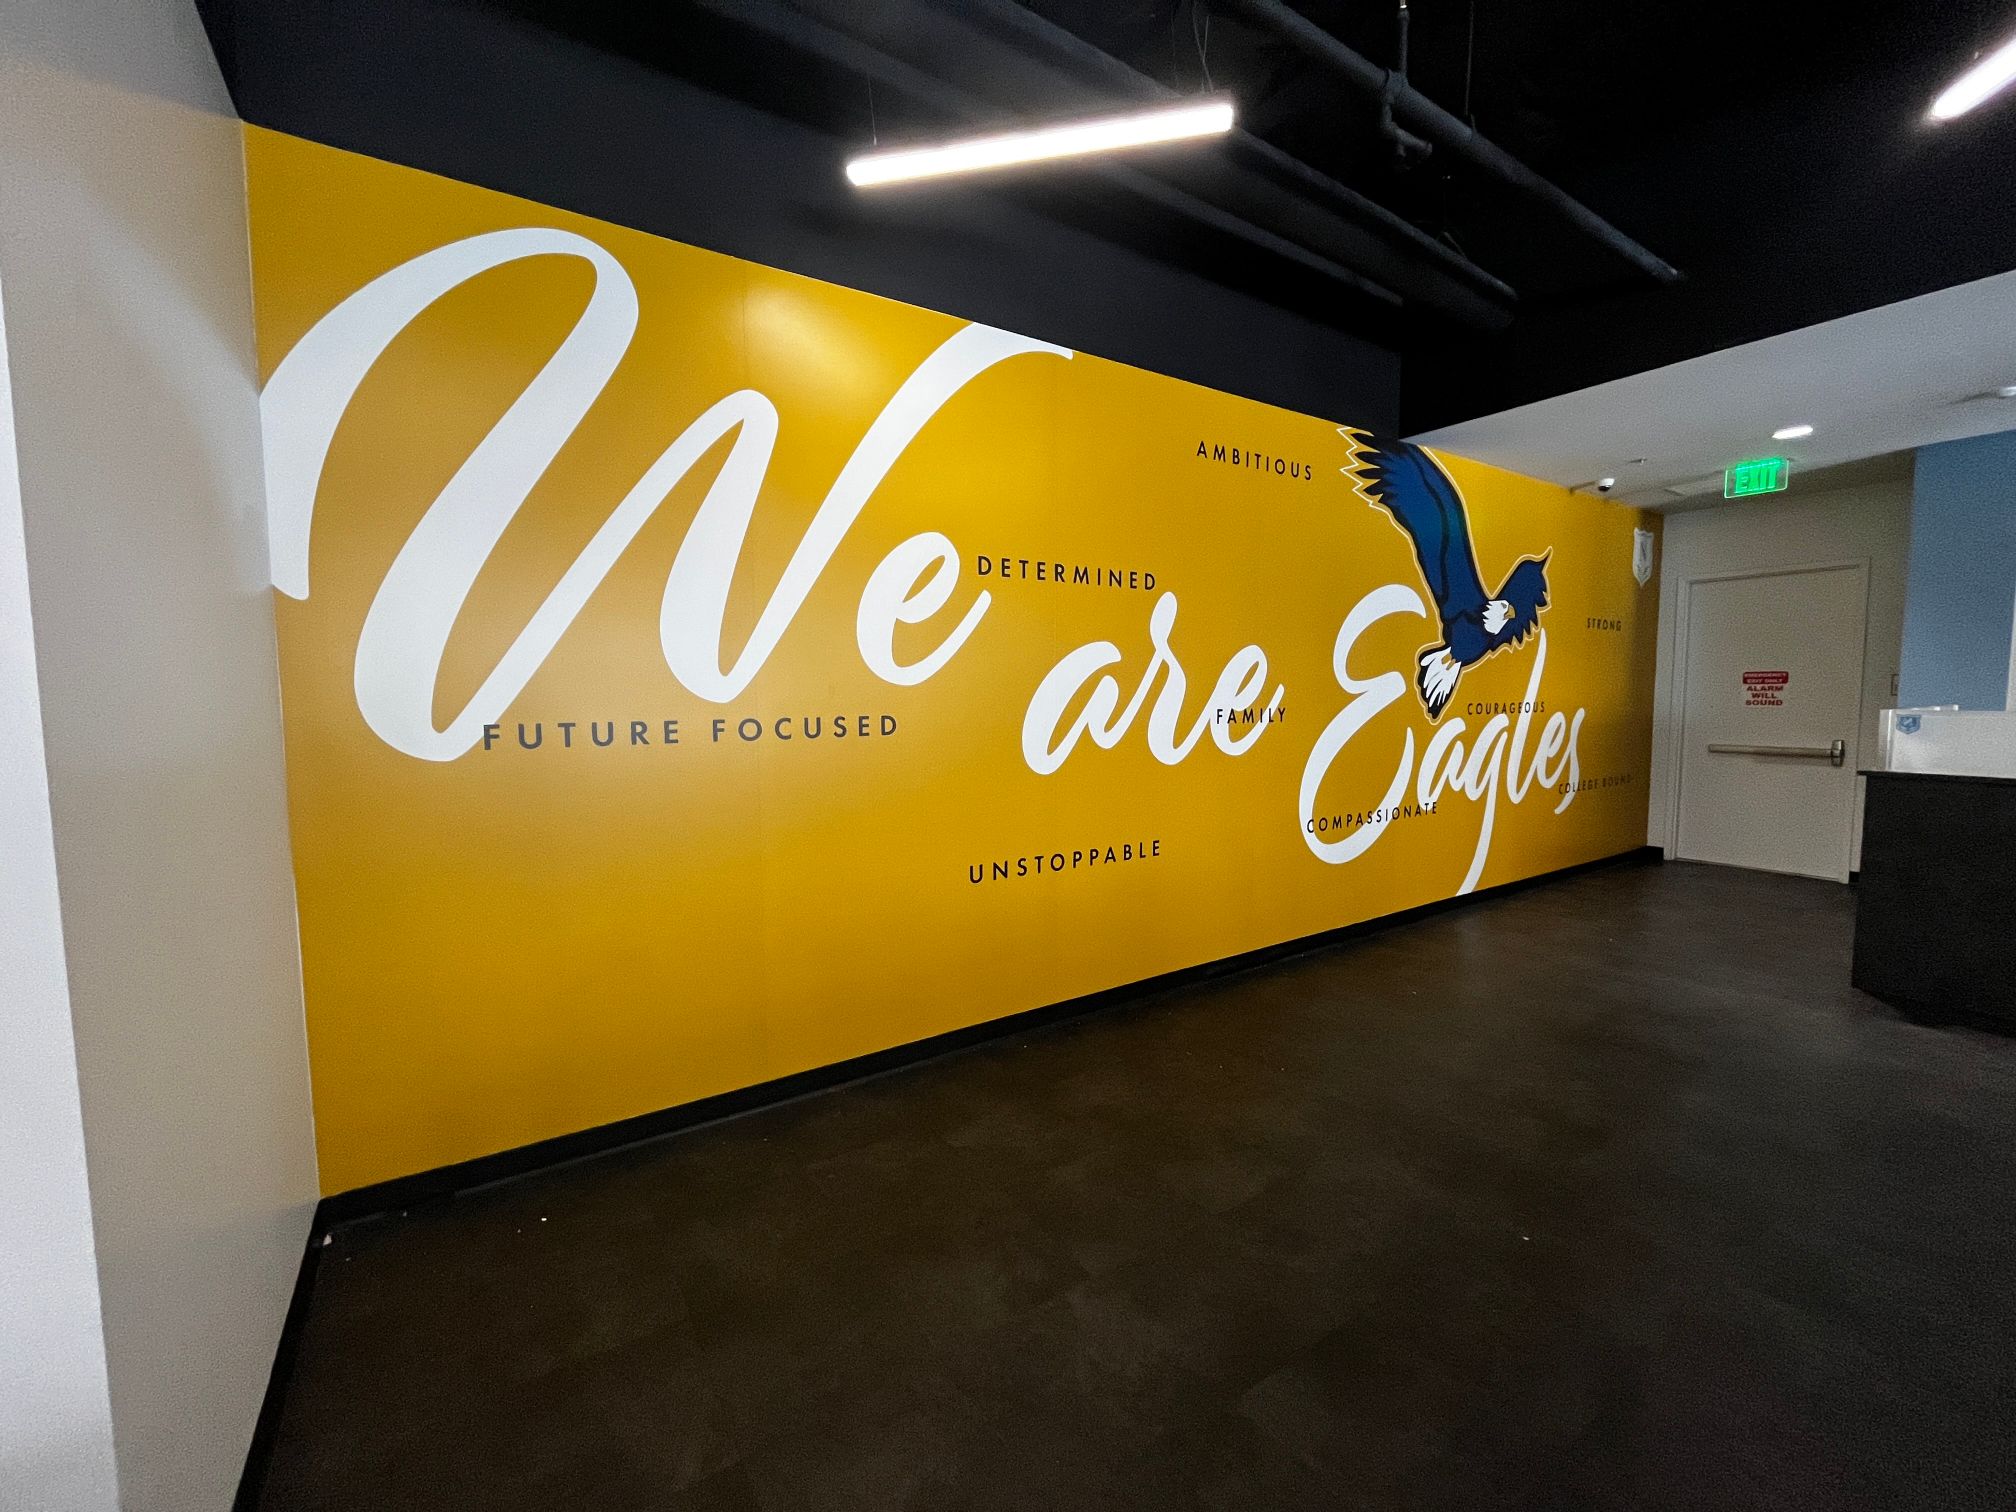 Custom Wall Graphics for NOVA Academy in Santa Ana, CA Show School Pride